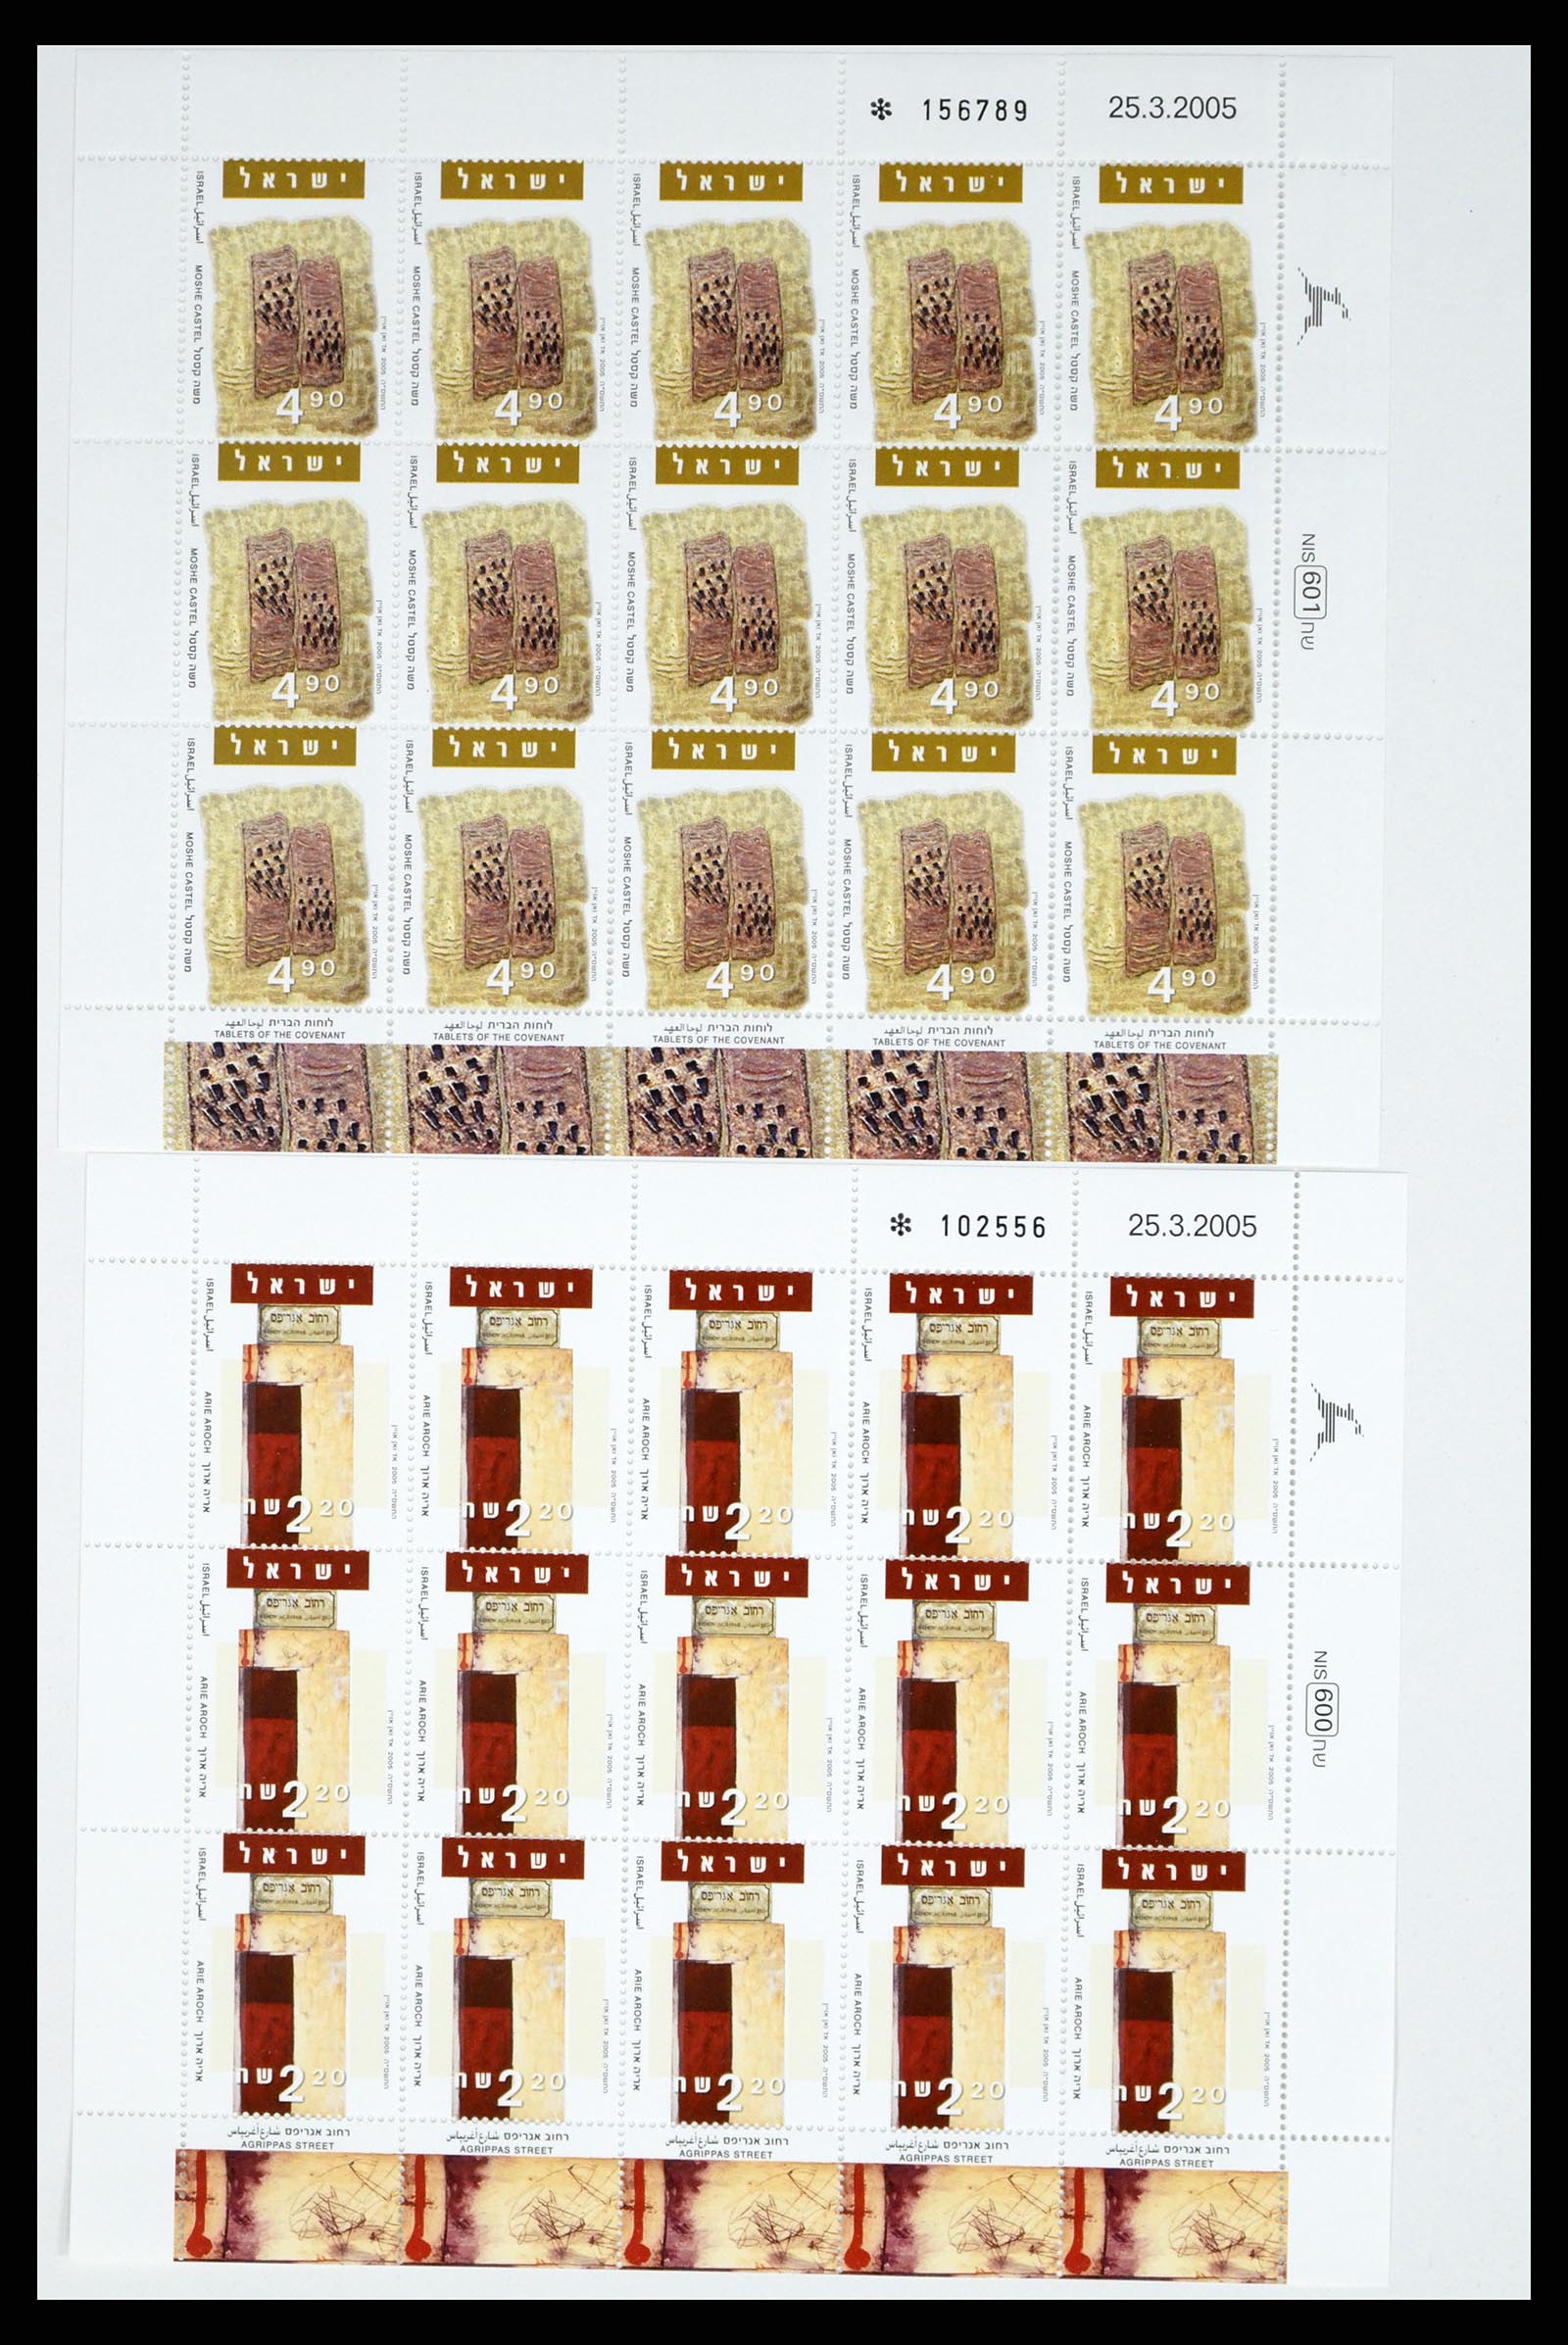 37779 371 - Stamp collection 37779 Israel sheetlets 1986-2009.